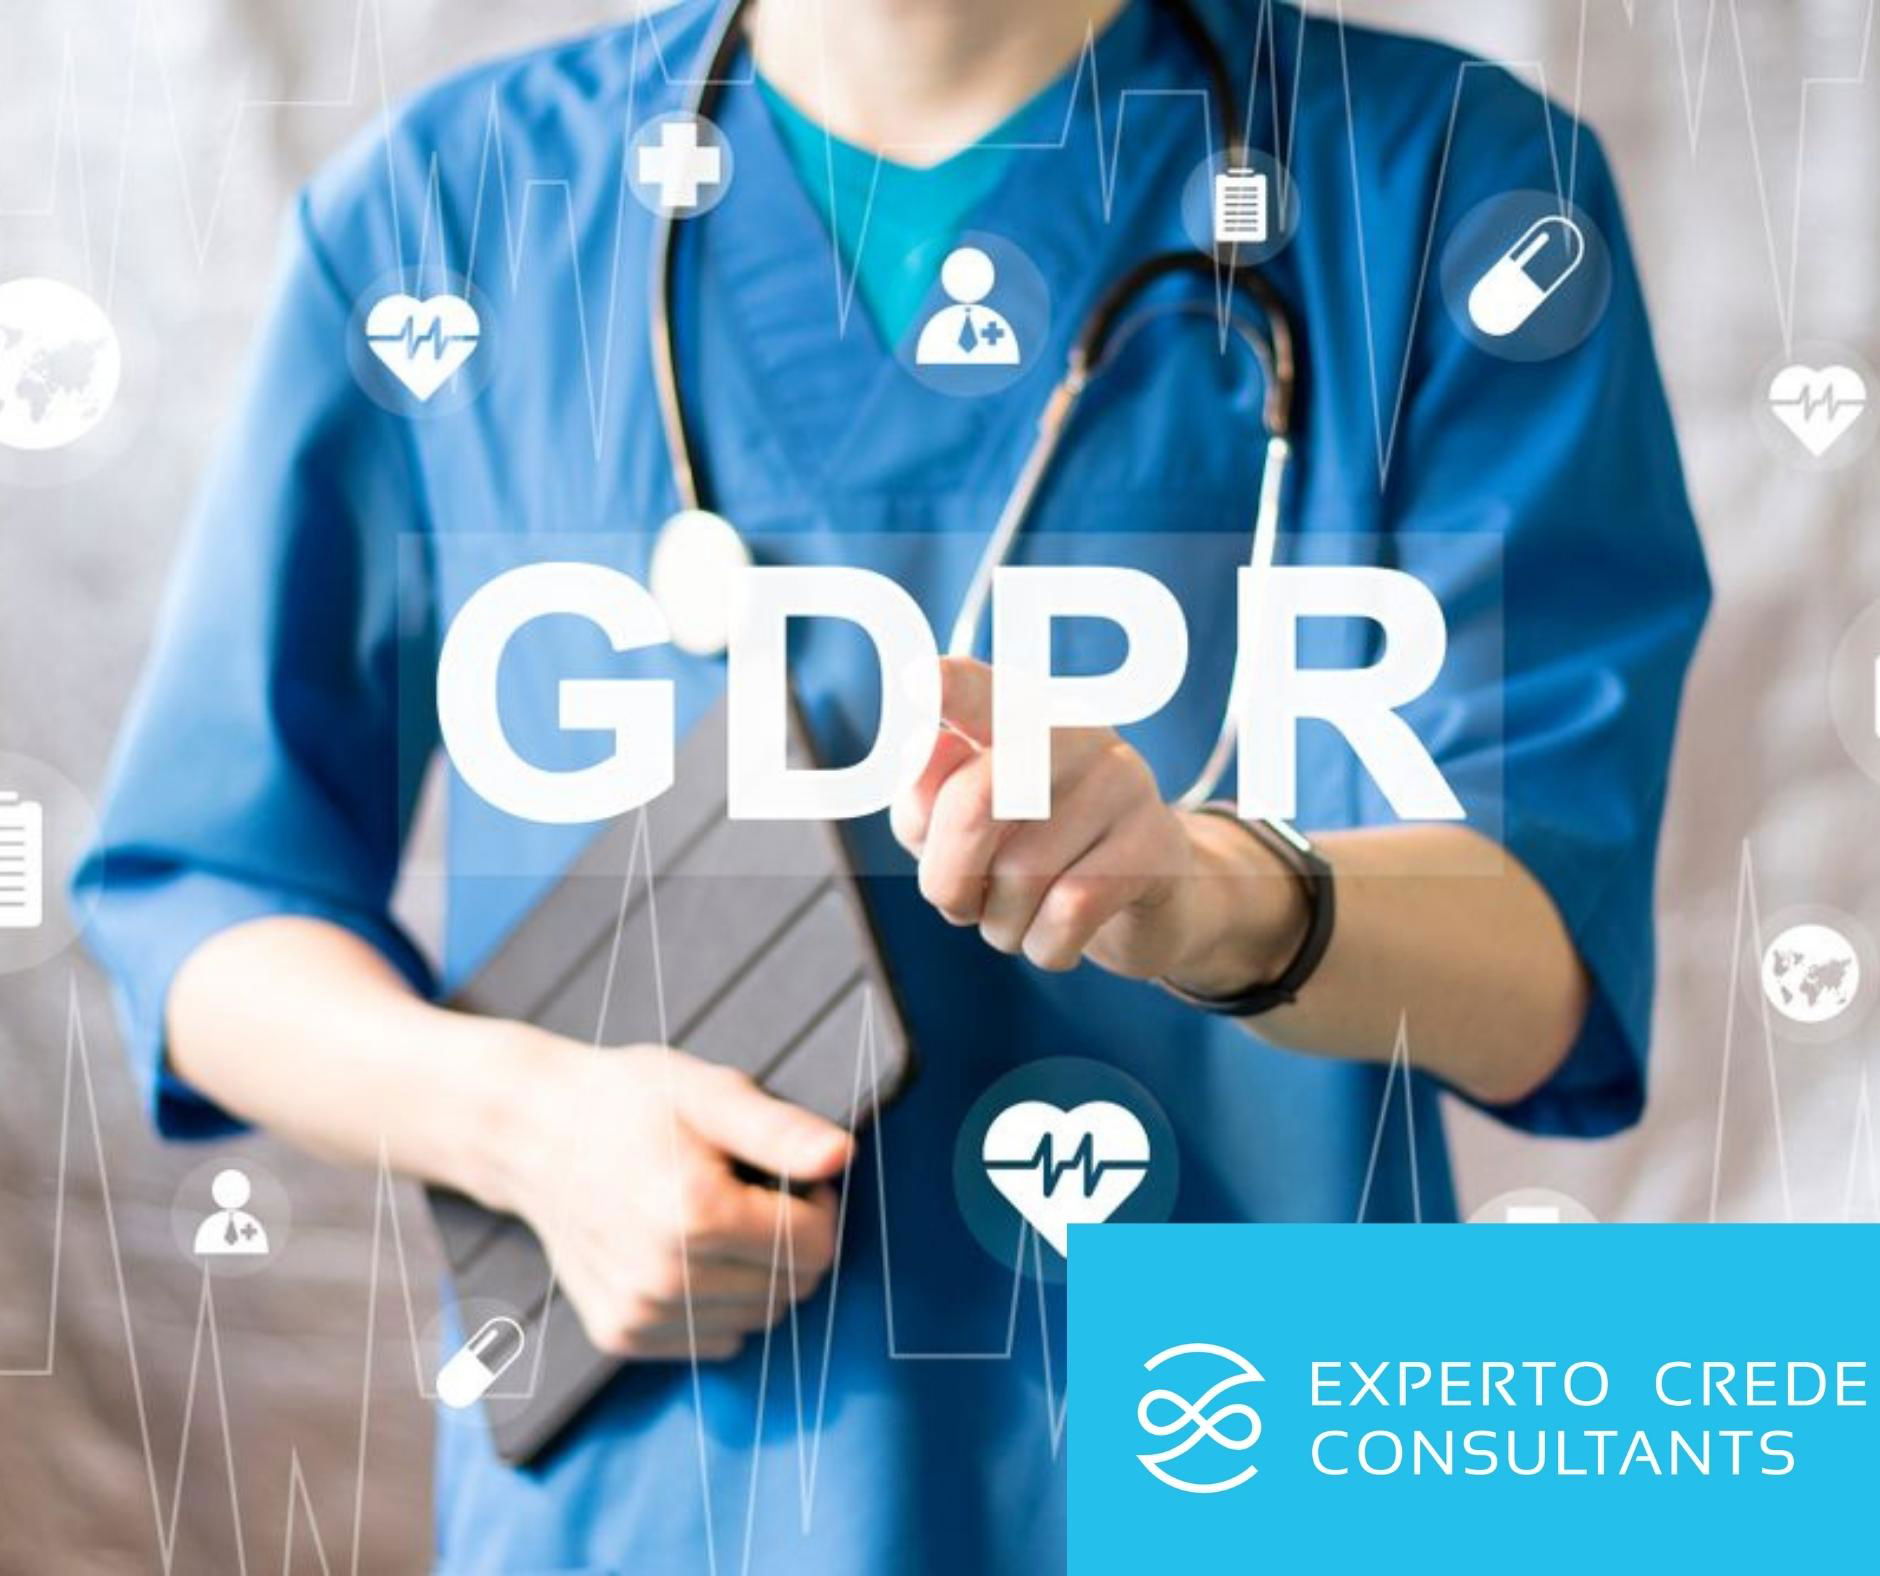 GDPR Ιδιωτικών Ιατρείων - Νέο συμβουλευτικό προϊόν από την Experto Crede Σύμβουλοι Επιχειρήσεων